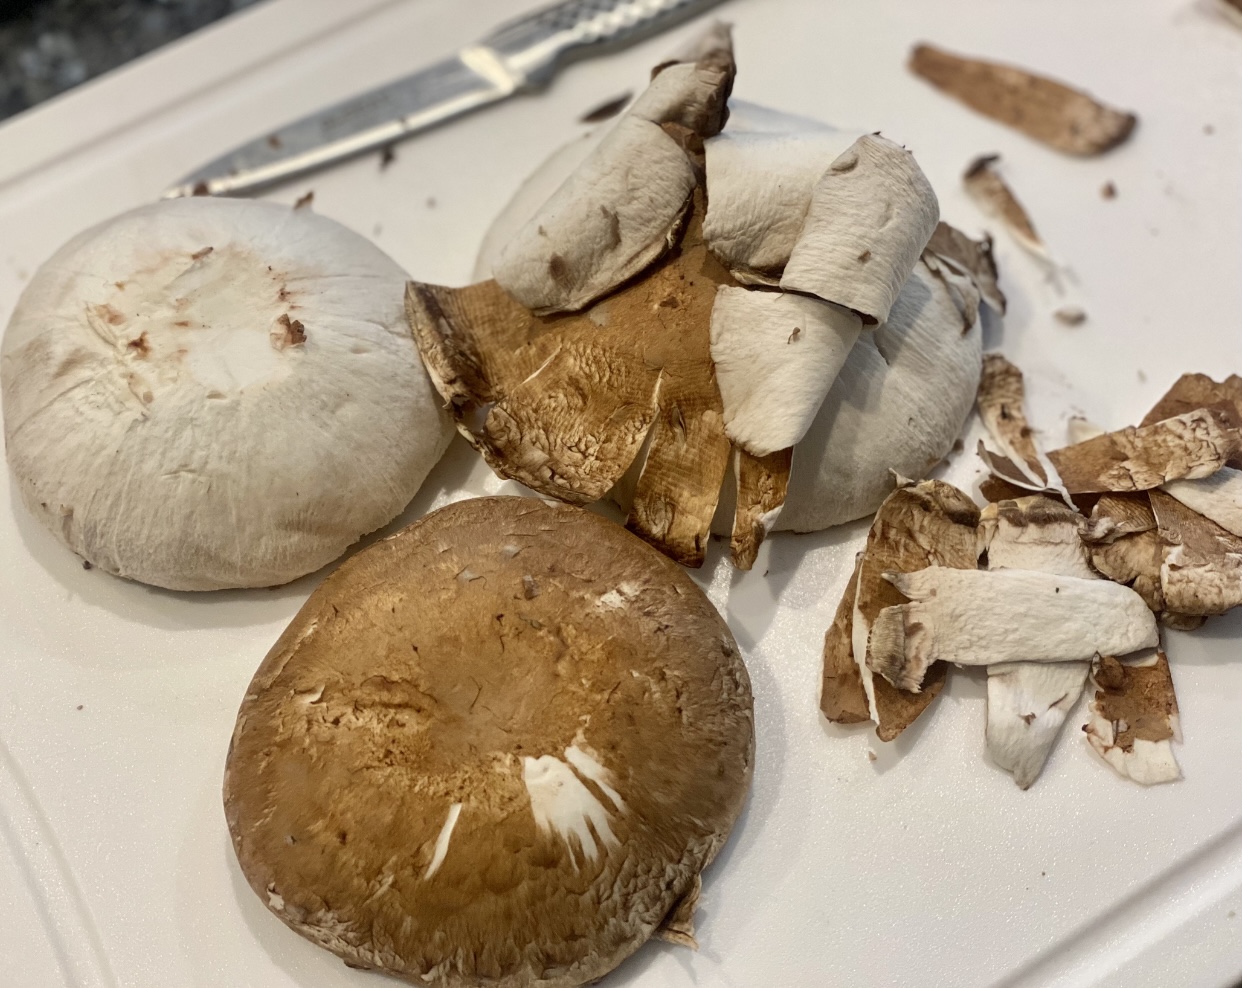 Grilling mushroom